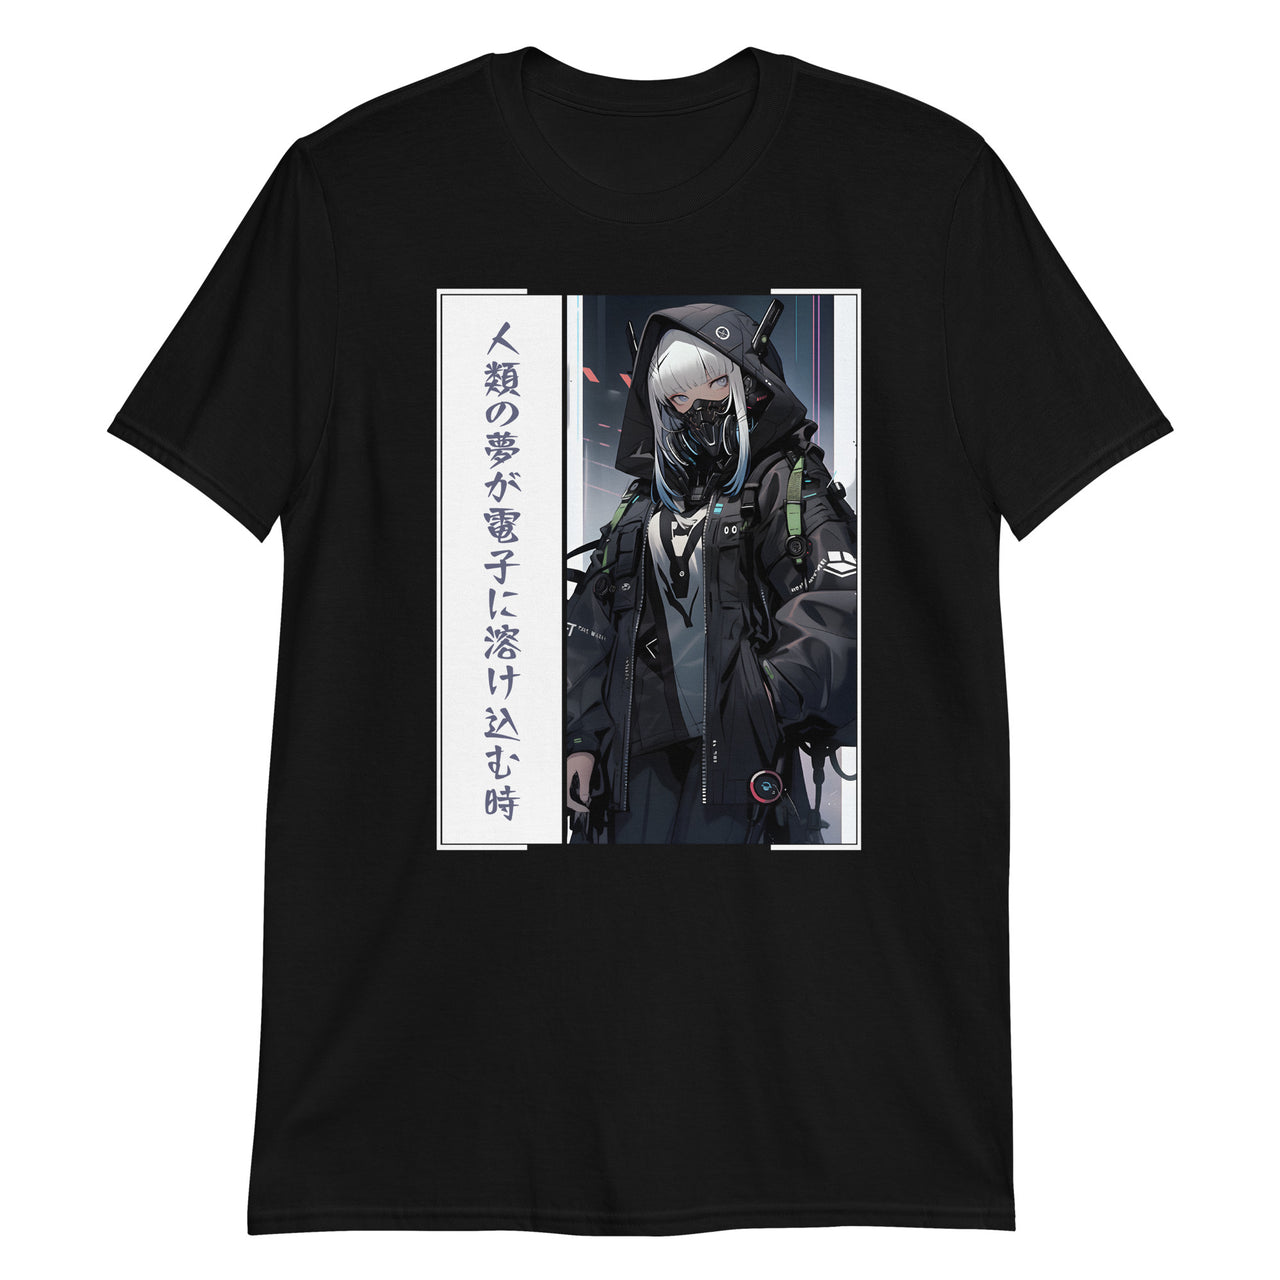 Human Cyberpunk Anime Japanese Style T-Shirt